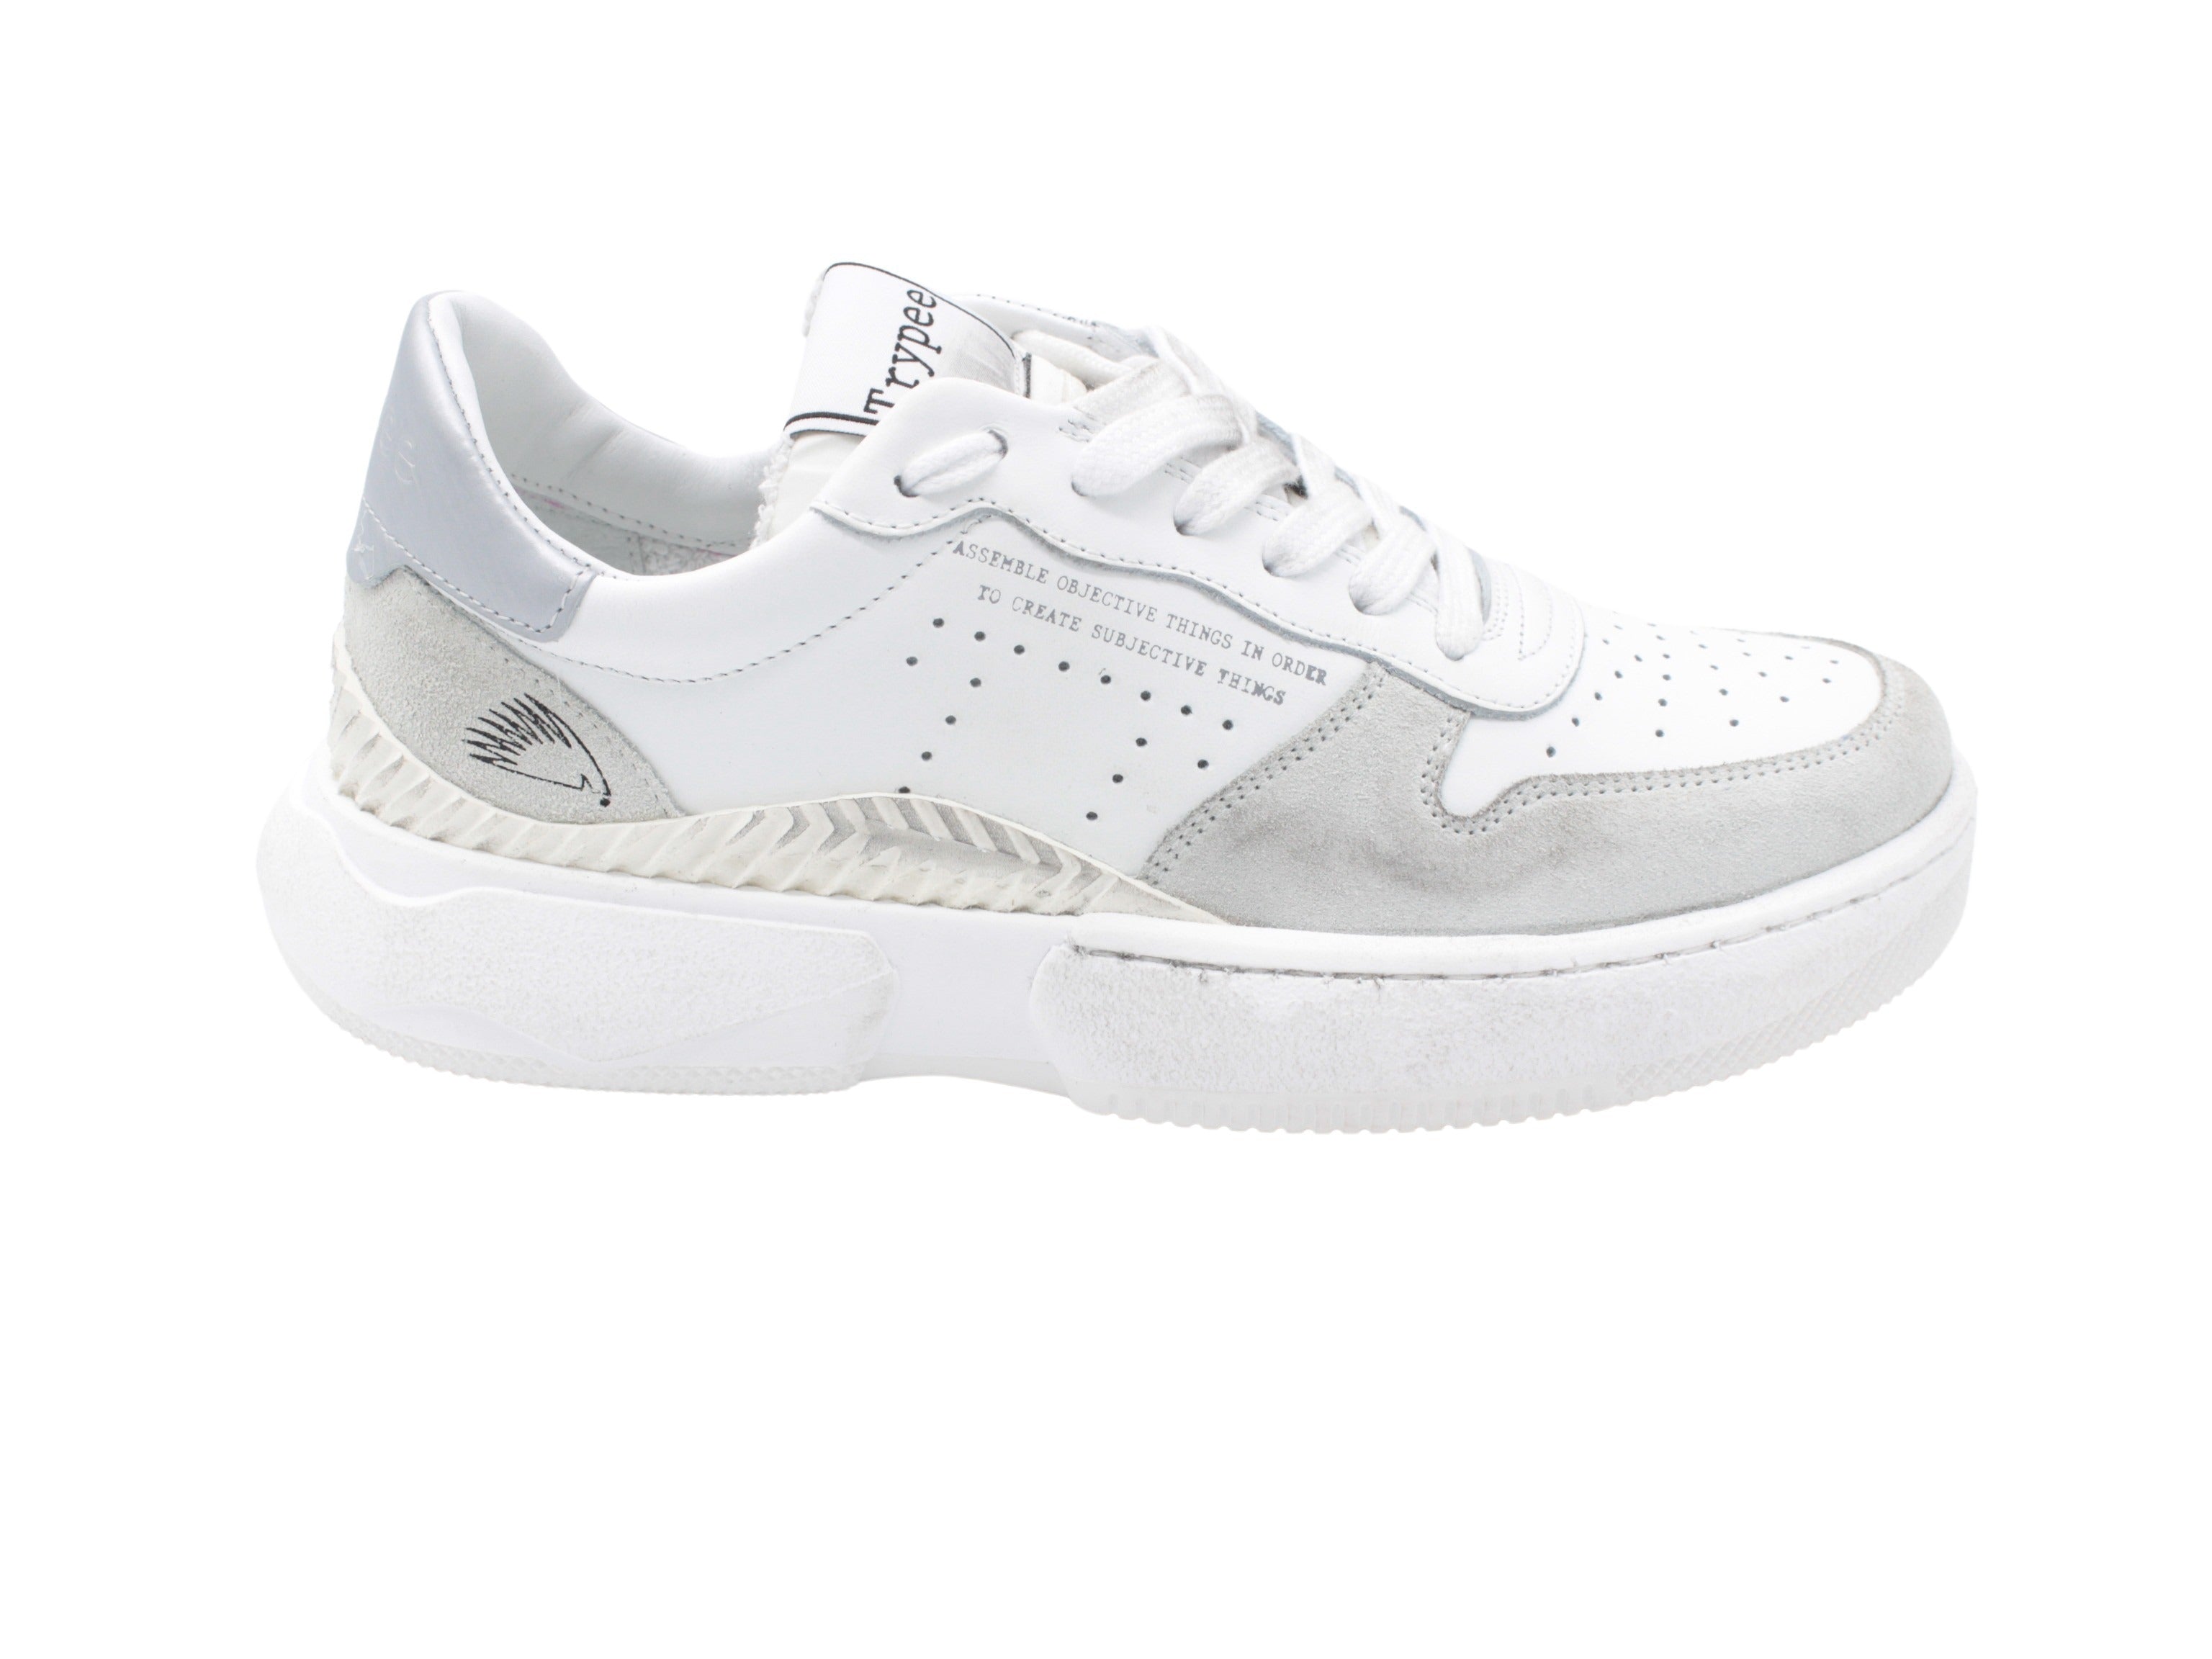 S126 white-silver sneaker